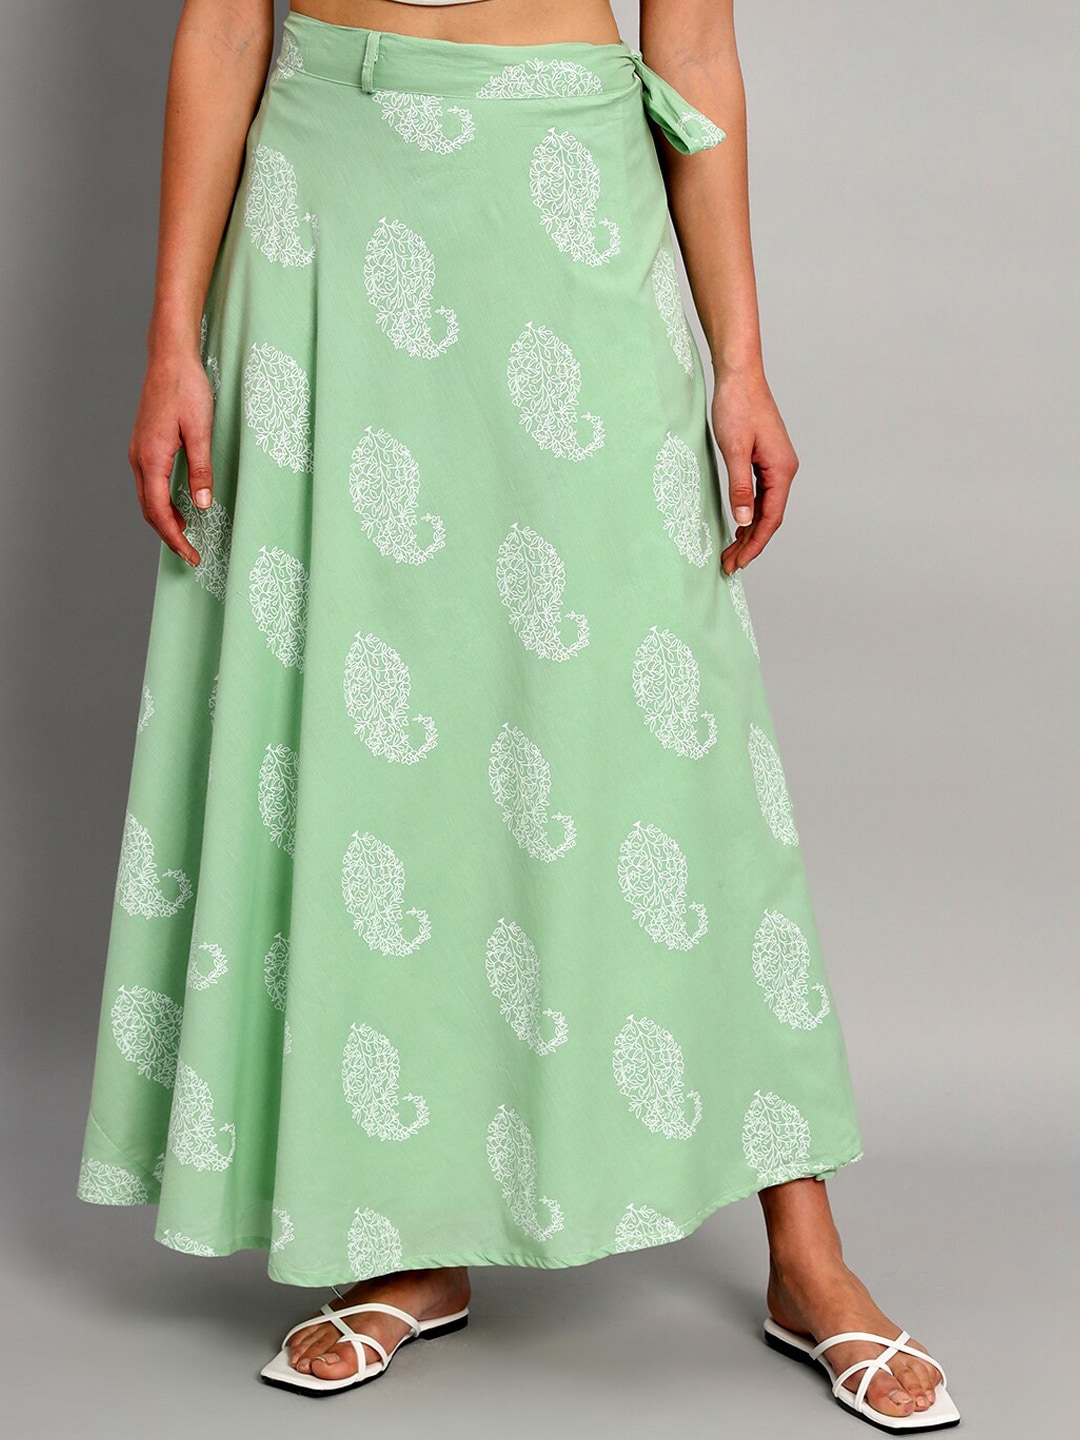 HANDICRAFT PALACE Printed Pure Cotton Wrap-Around Maxi Skirt Price in India